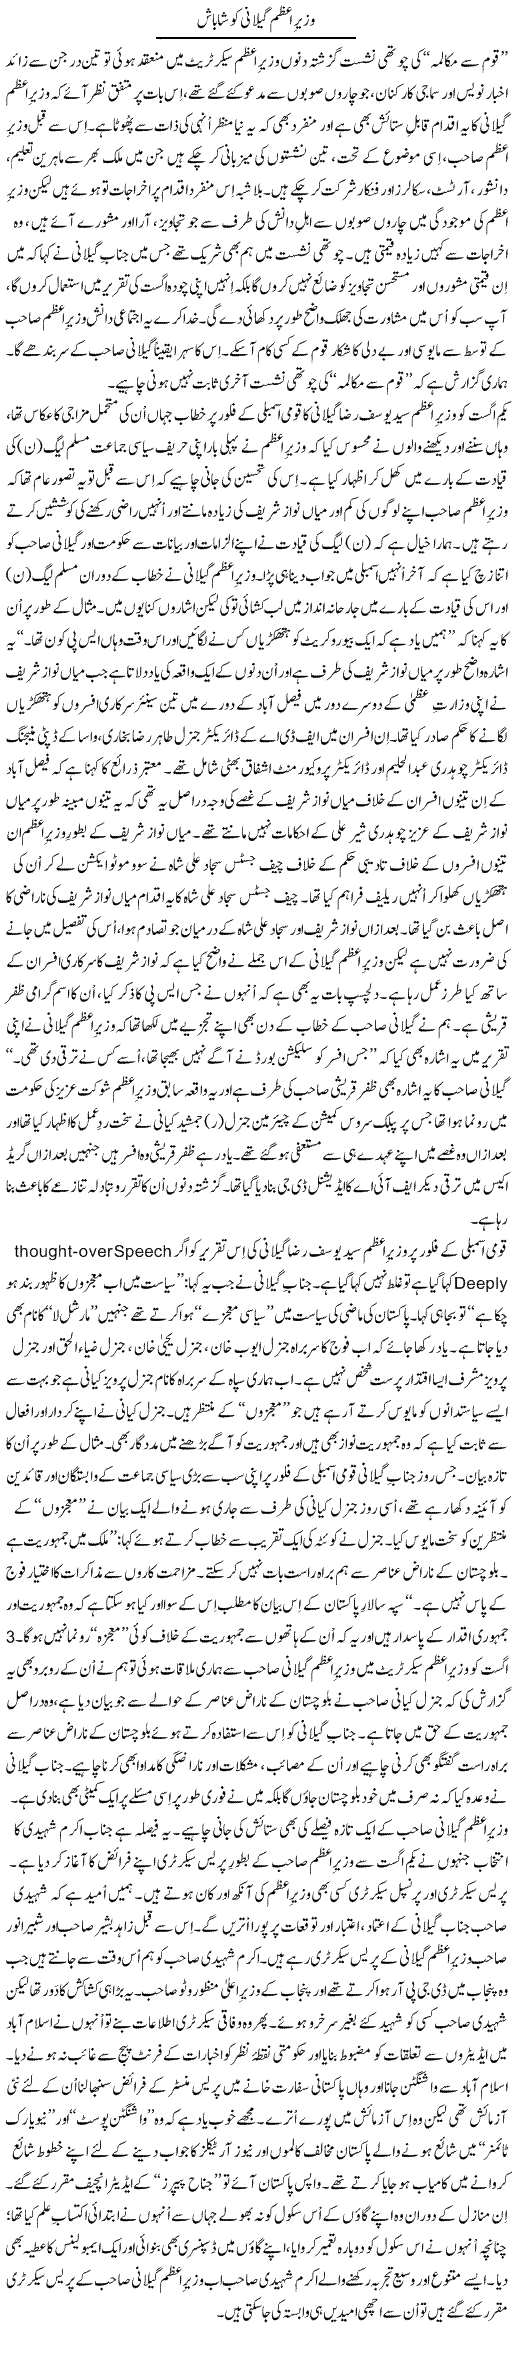 Well Done Geelani Express Column Tanvir Qasir 6 August 2011